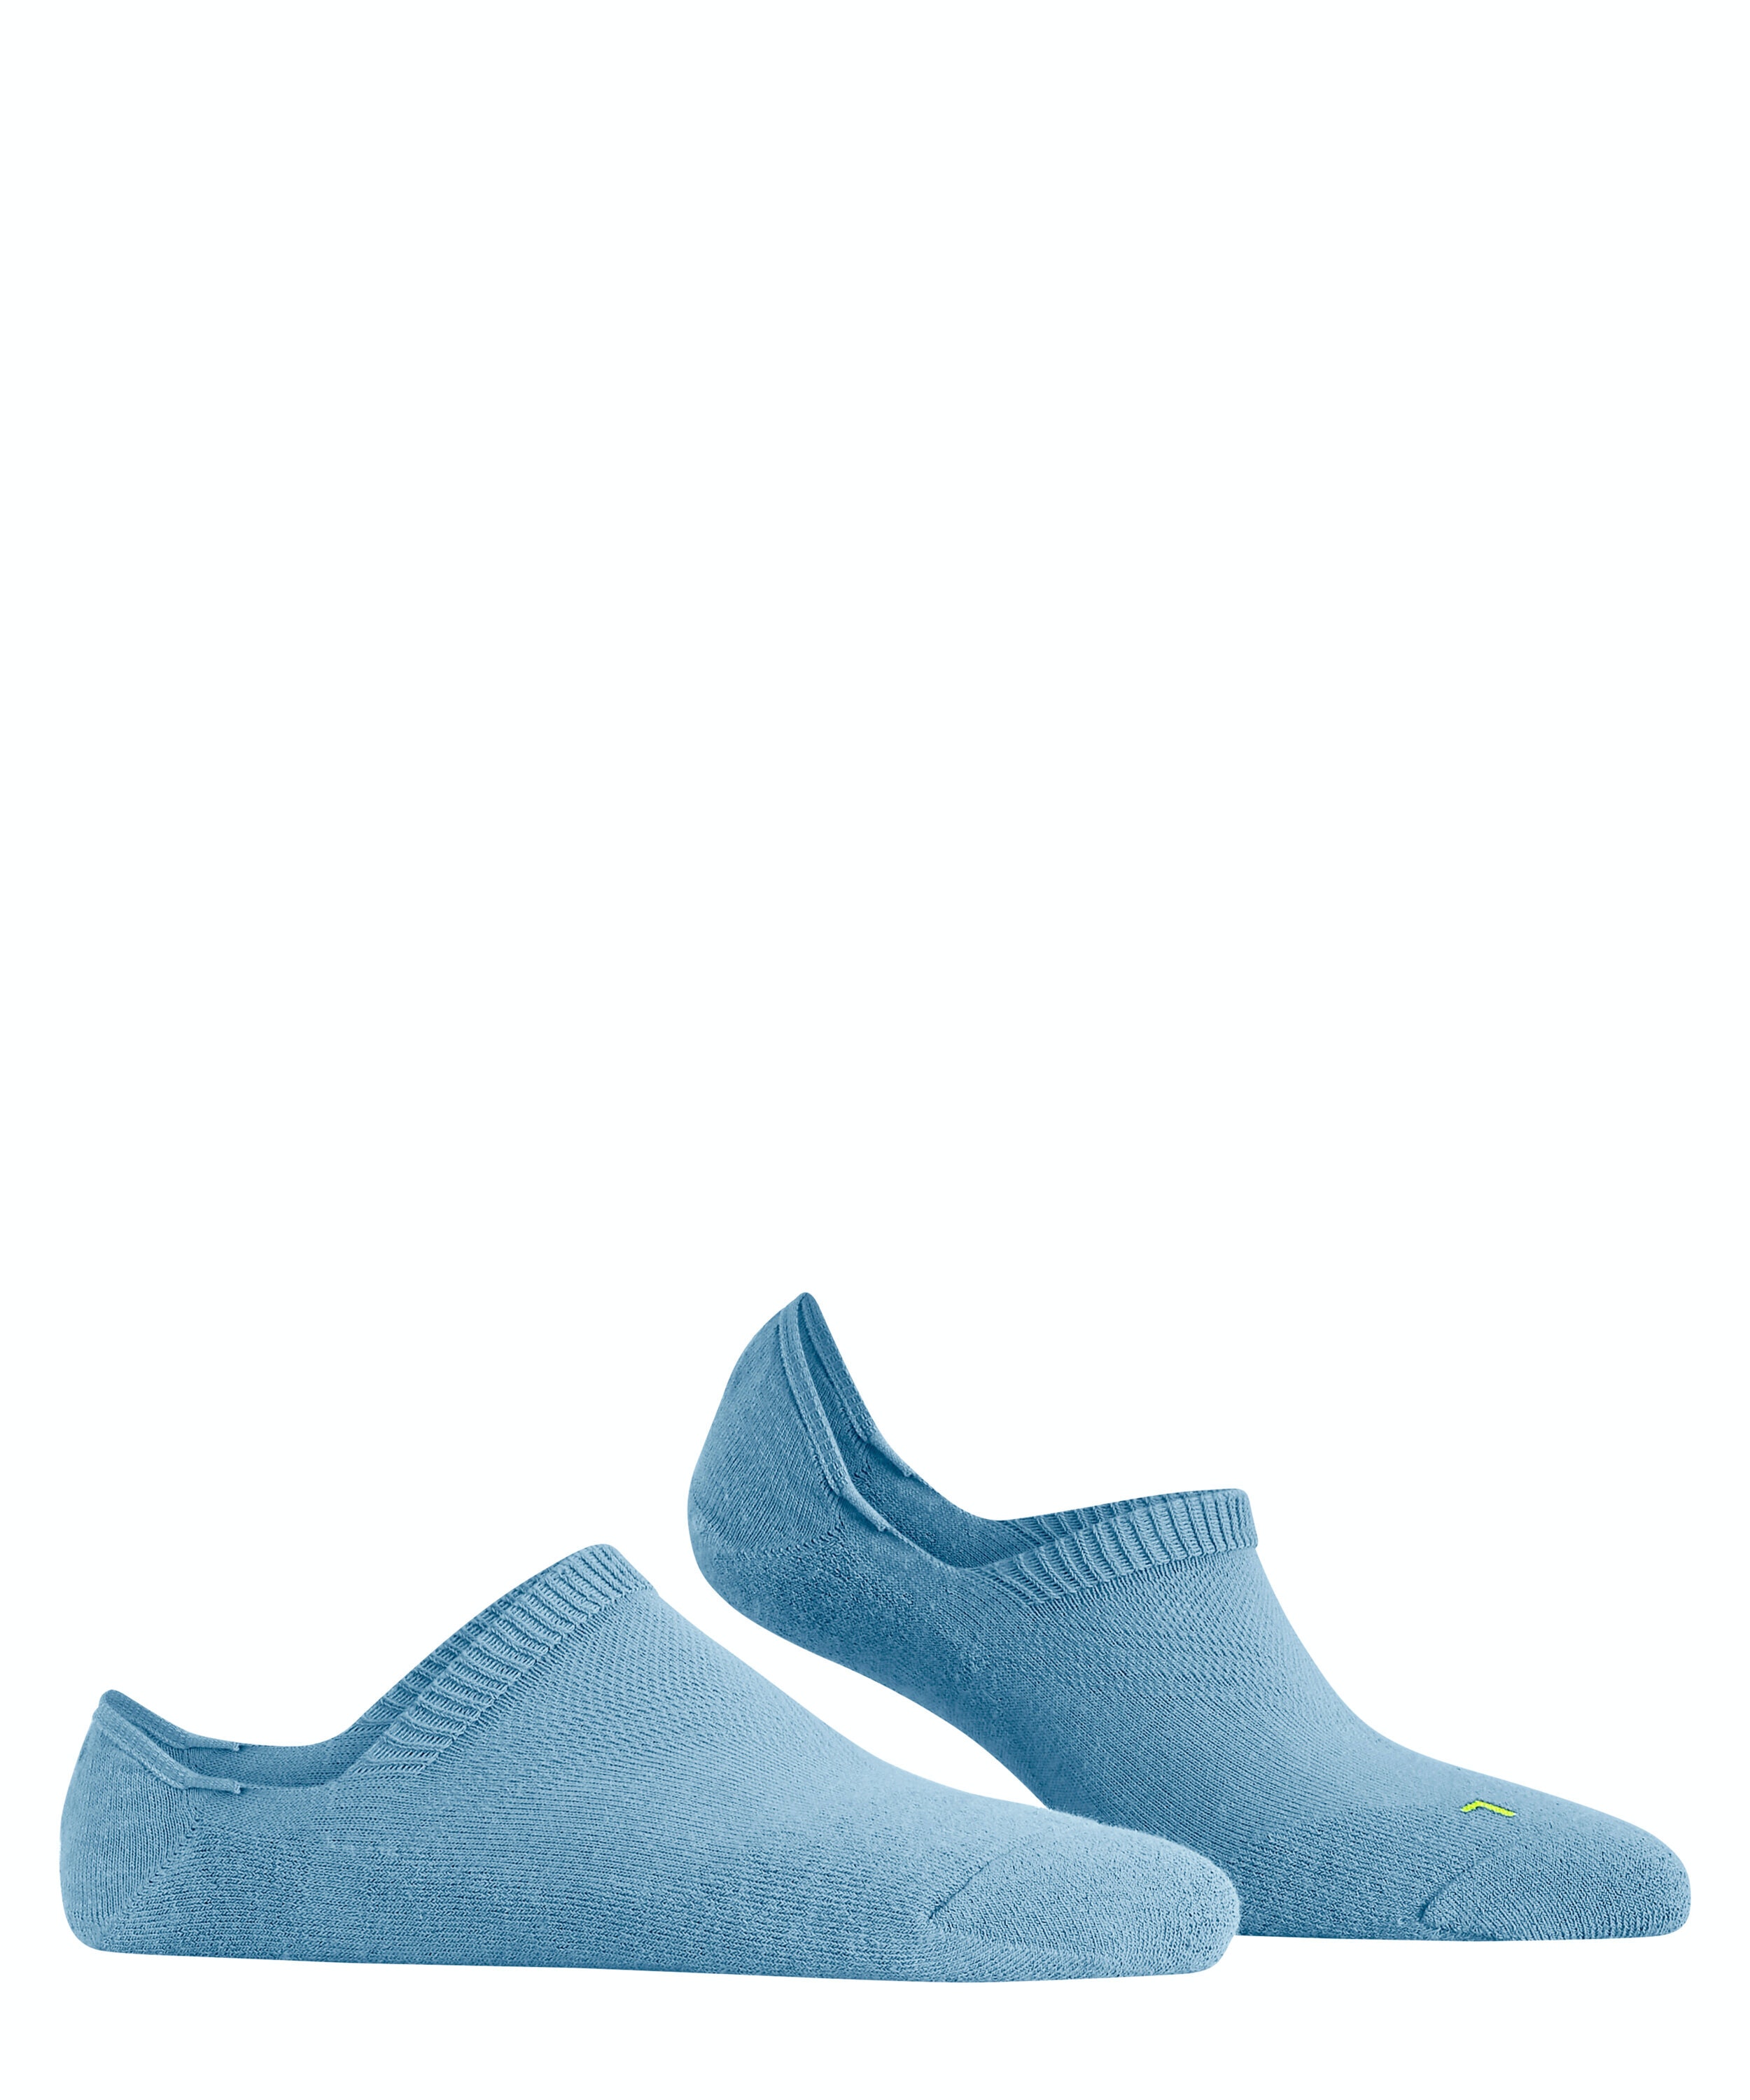 FALKE Cool Kick dames kousenvoetjes, azuur blauw (azur)